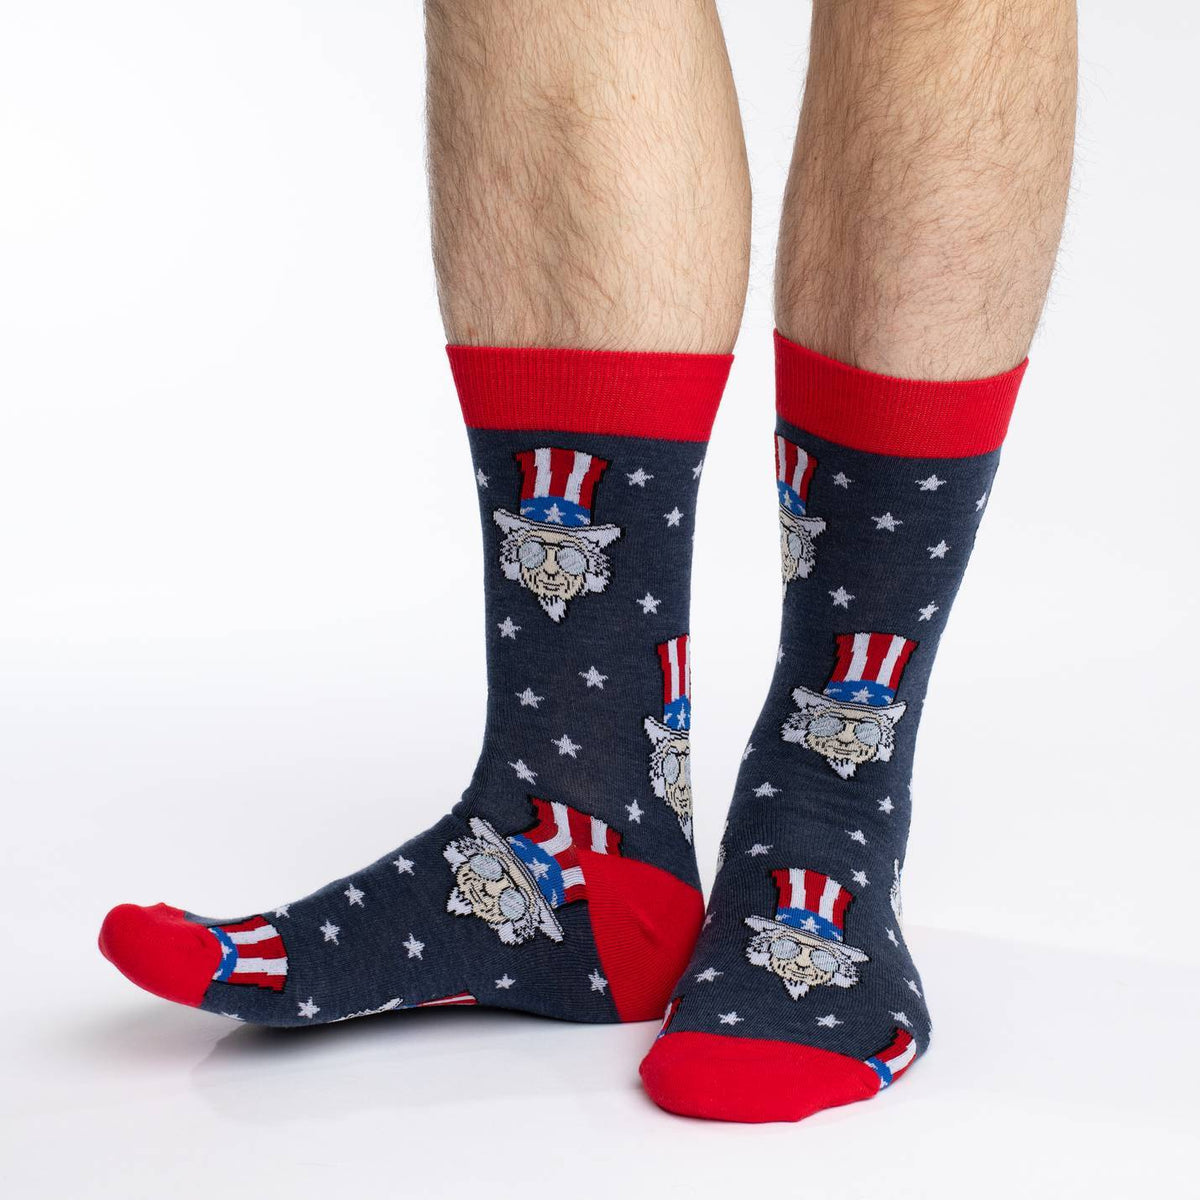 Men's Cool Uncle Sam Socks